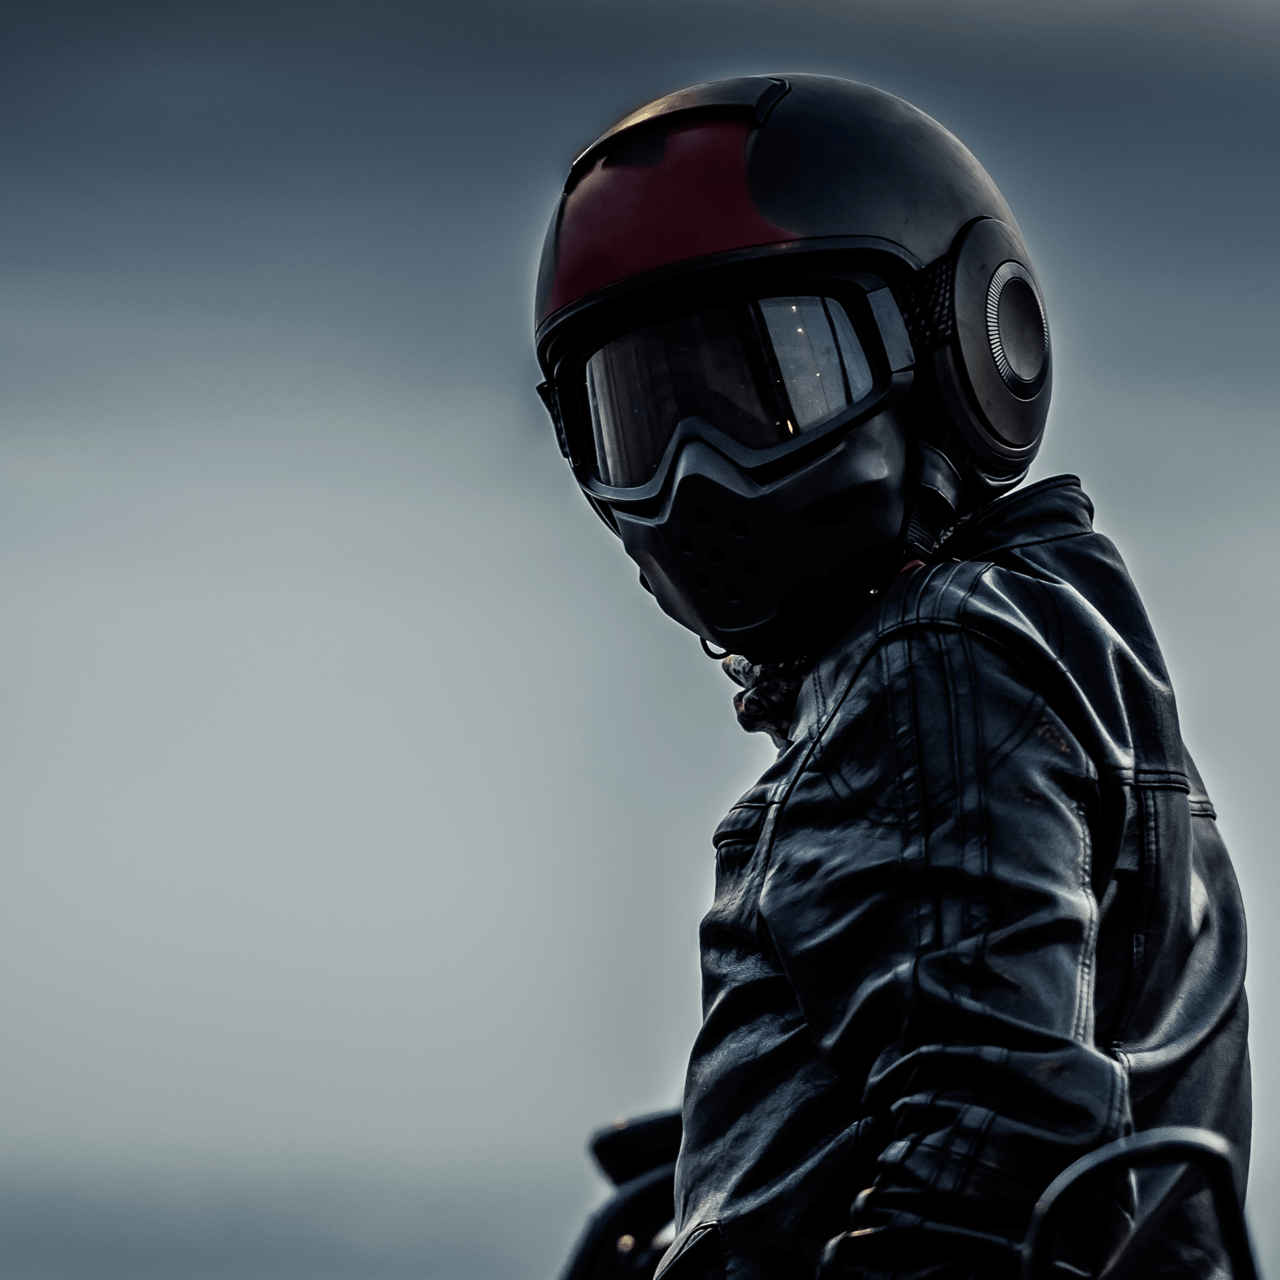 A biker donned all in black with black helmet